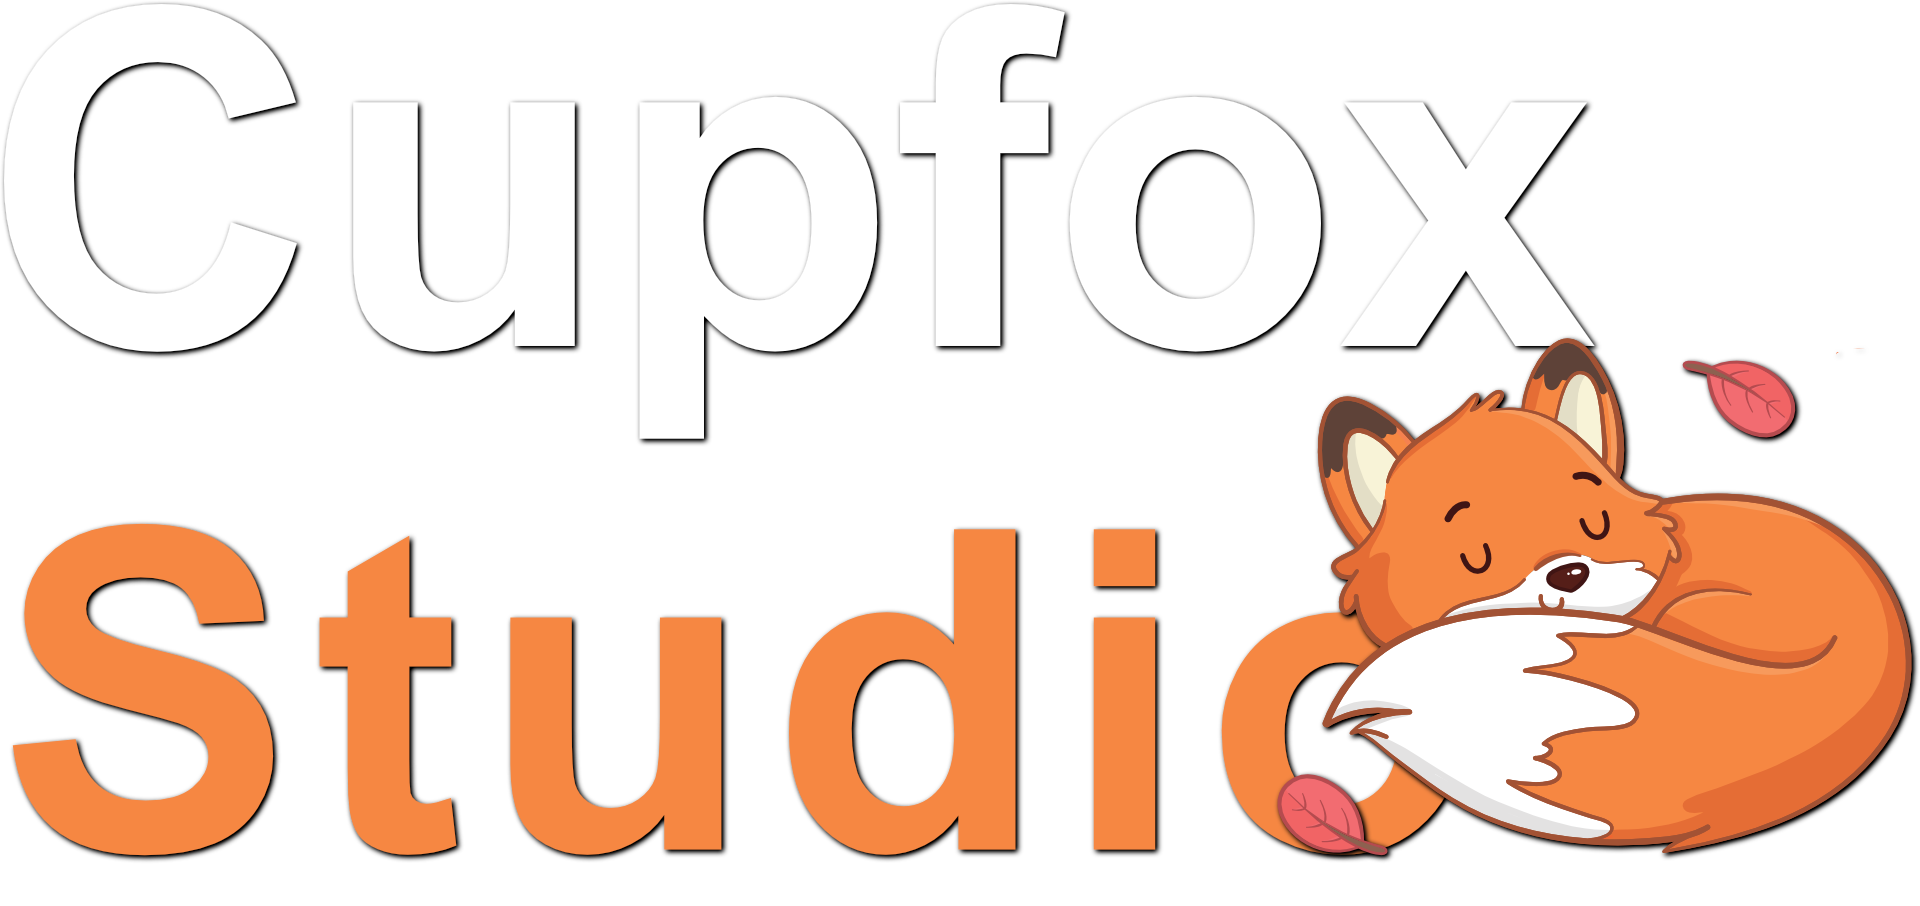 Cupfox Studio